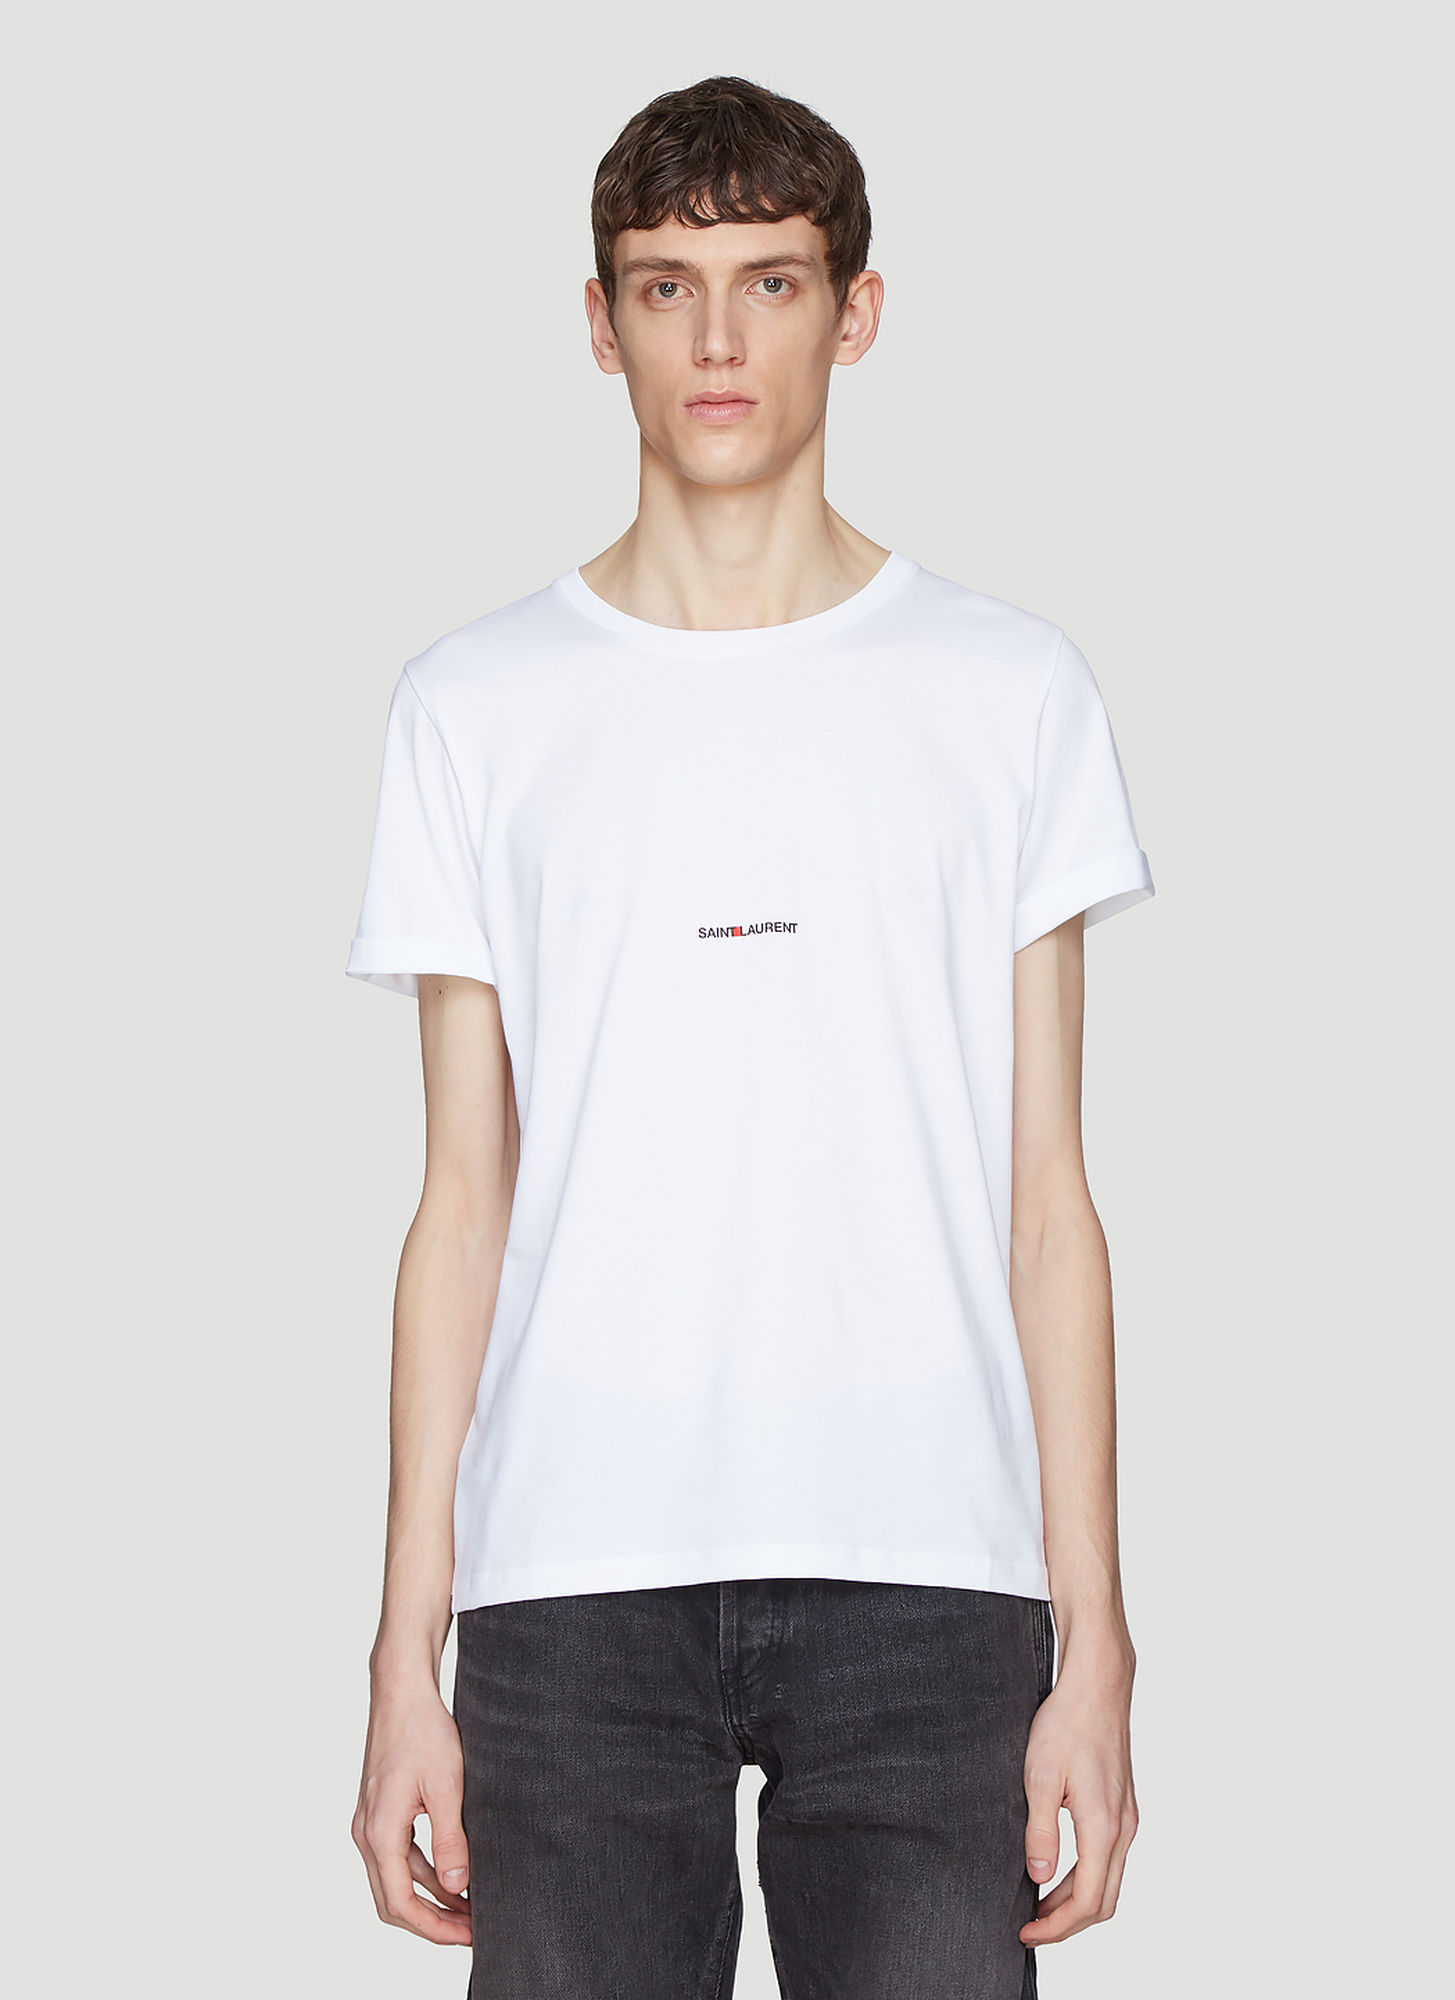 Saint Laurent Logo T-Shirt in White size XL | The Fashionisto